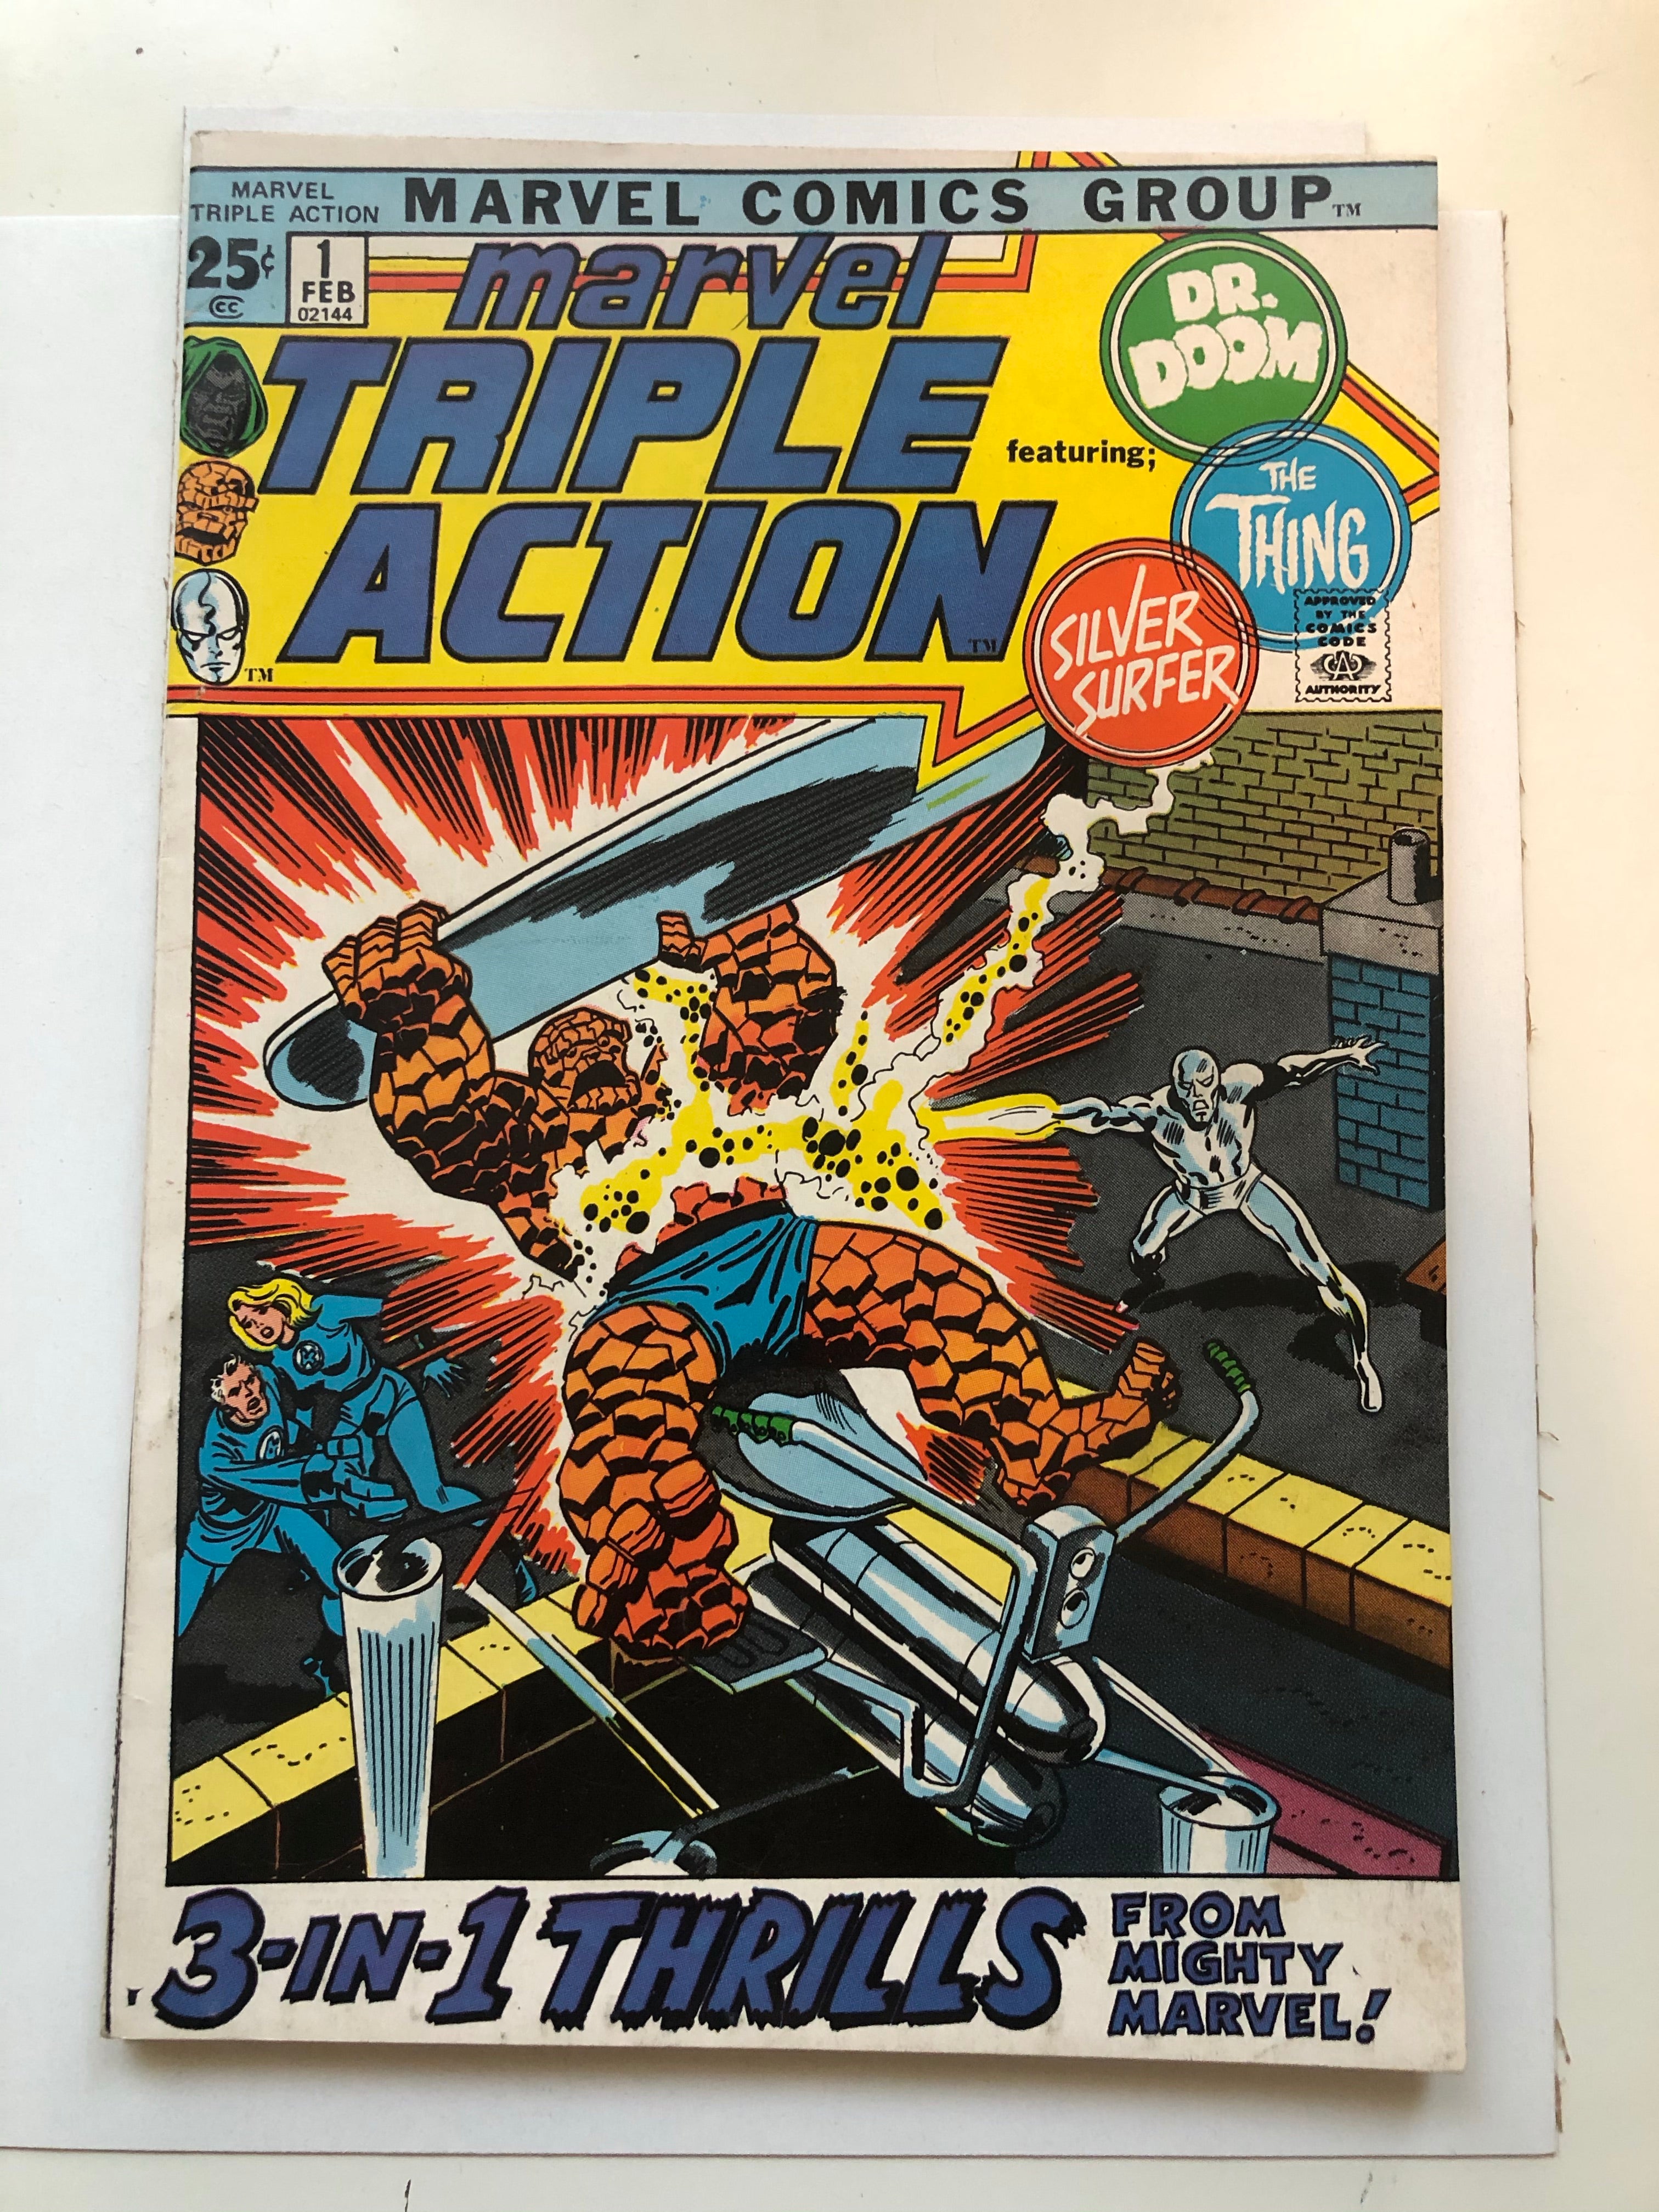 Marvel Triple Action #1 comic book